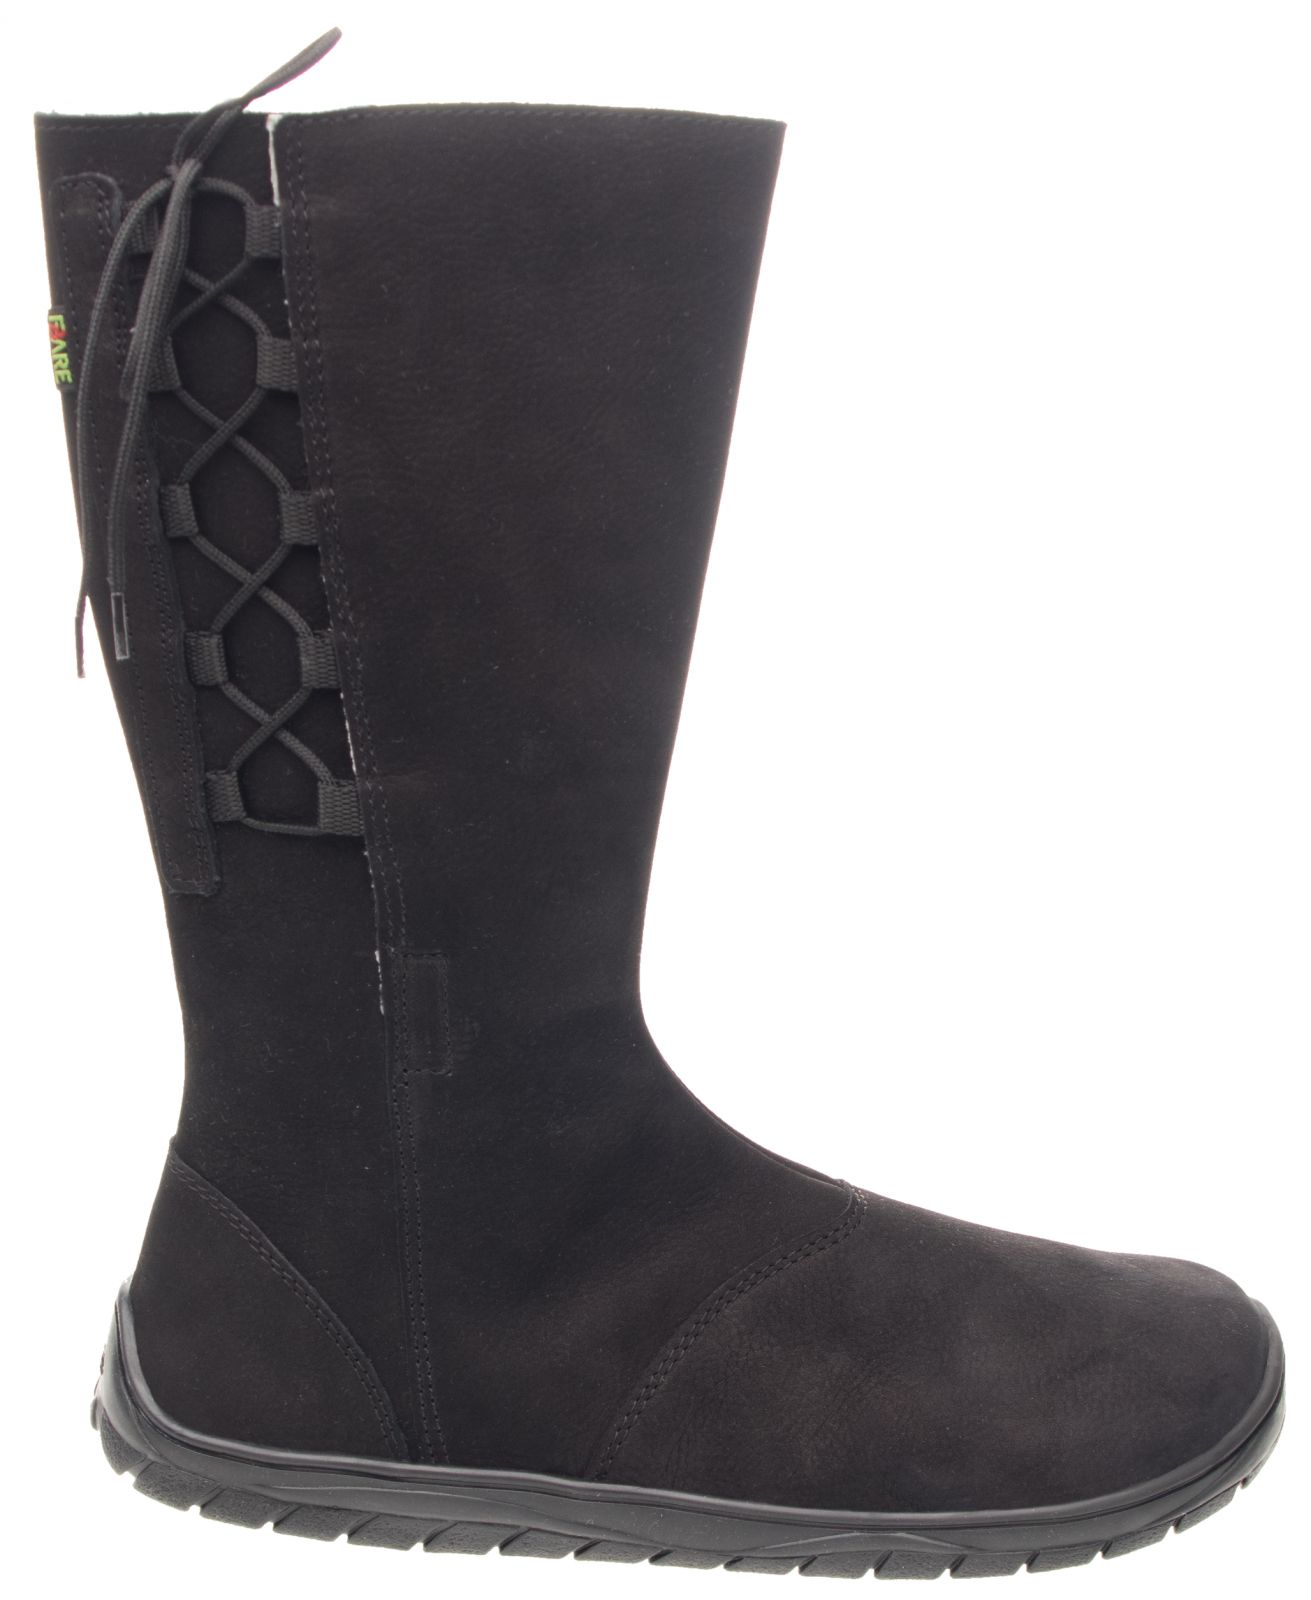 Barefoot Fare bare womens winter boots B5842202